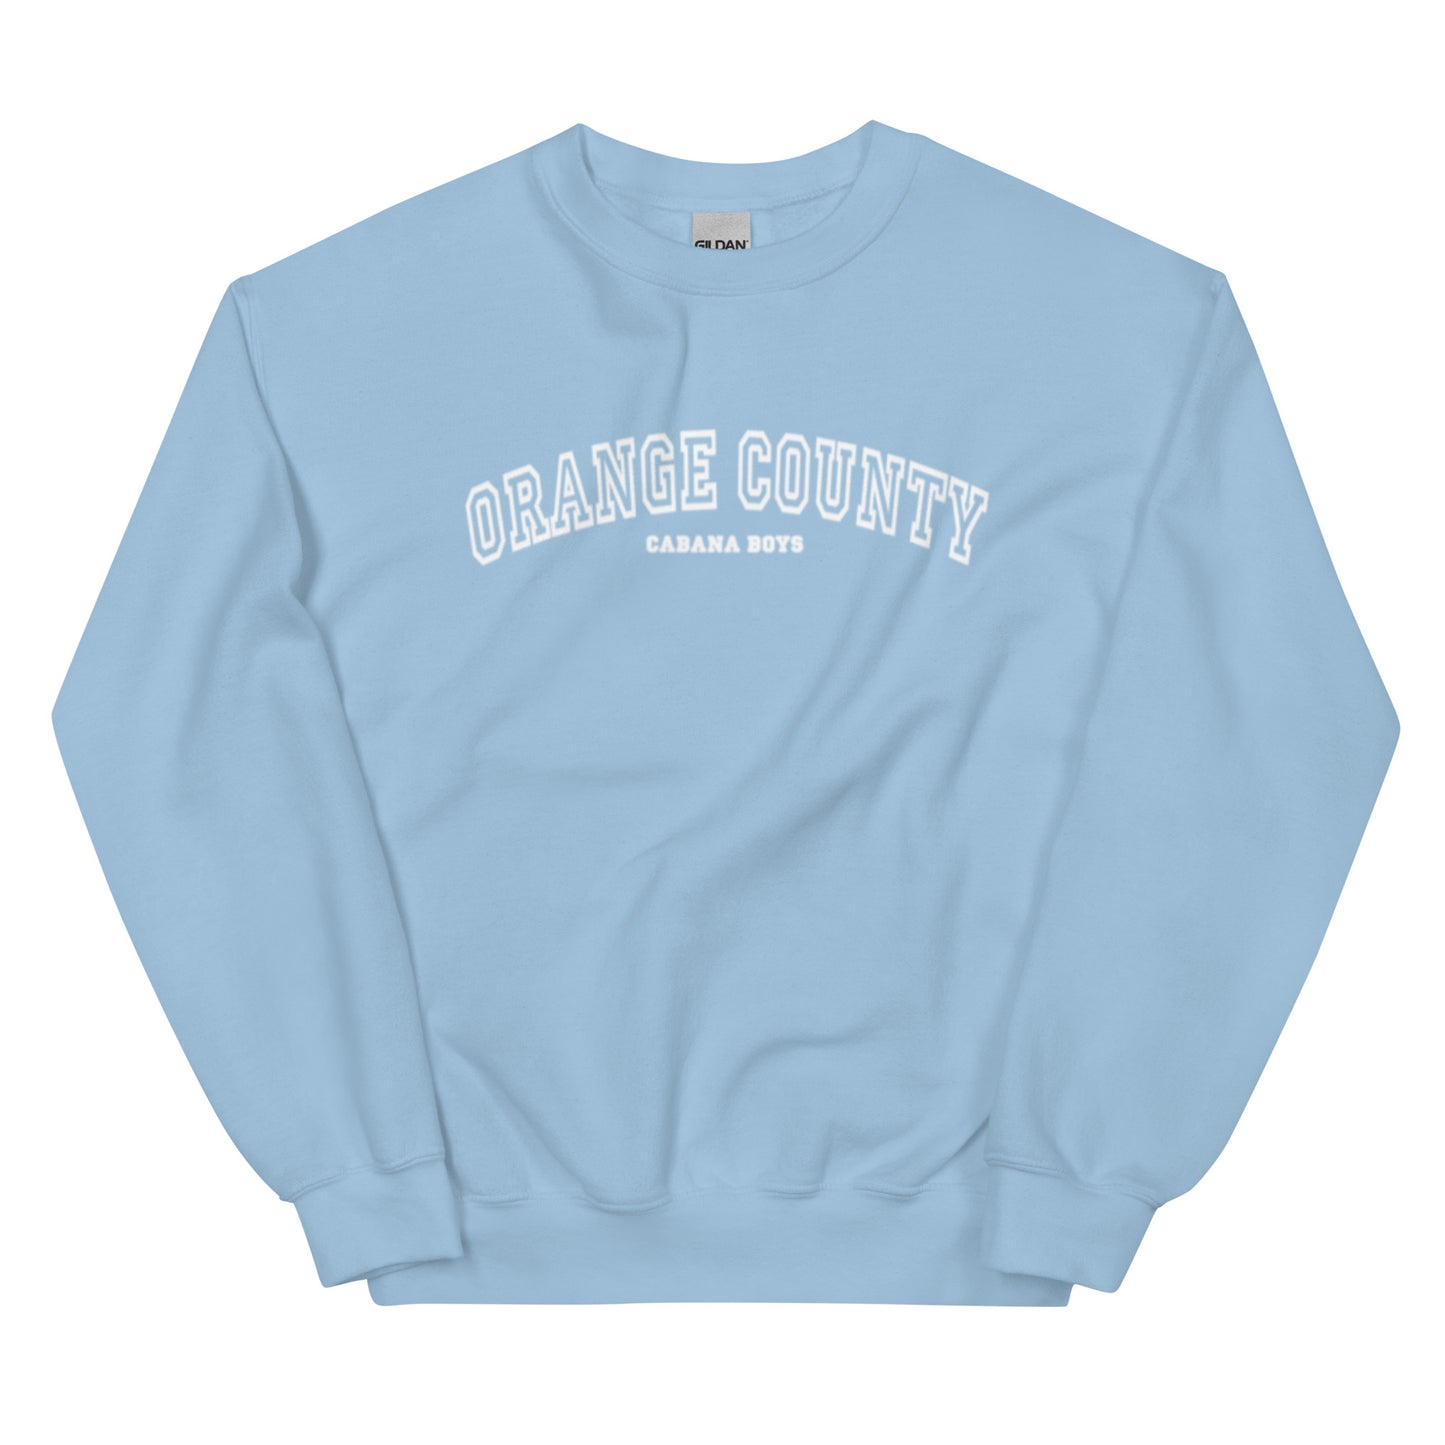 Collegiate Collection Orange County Sweatshirt